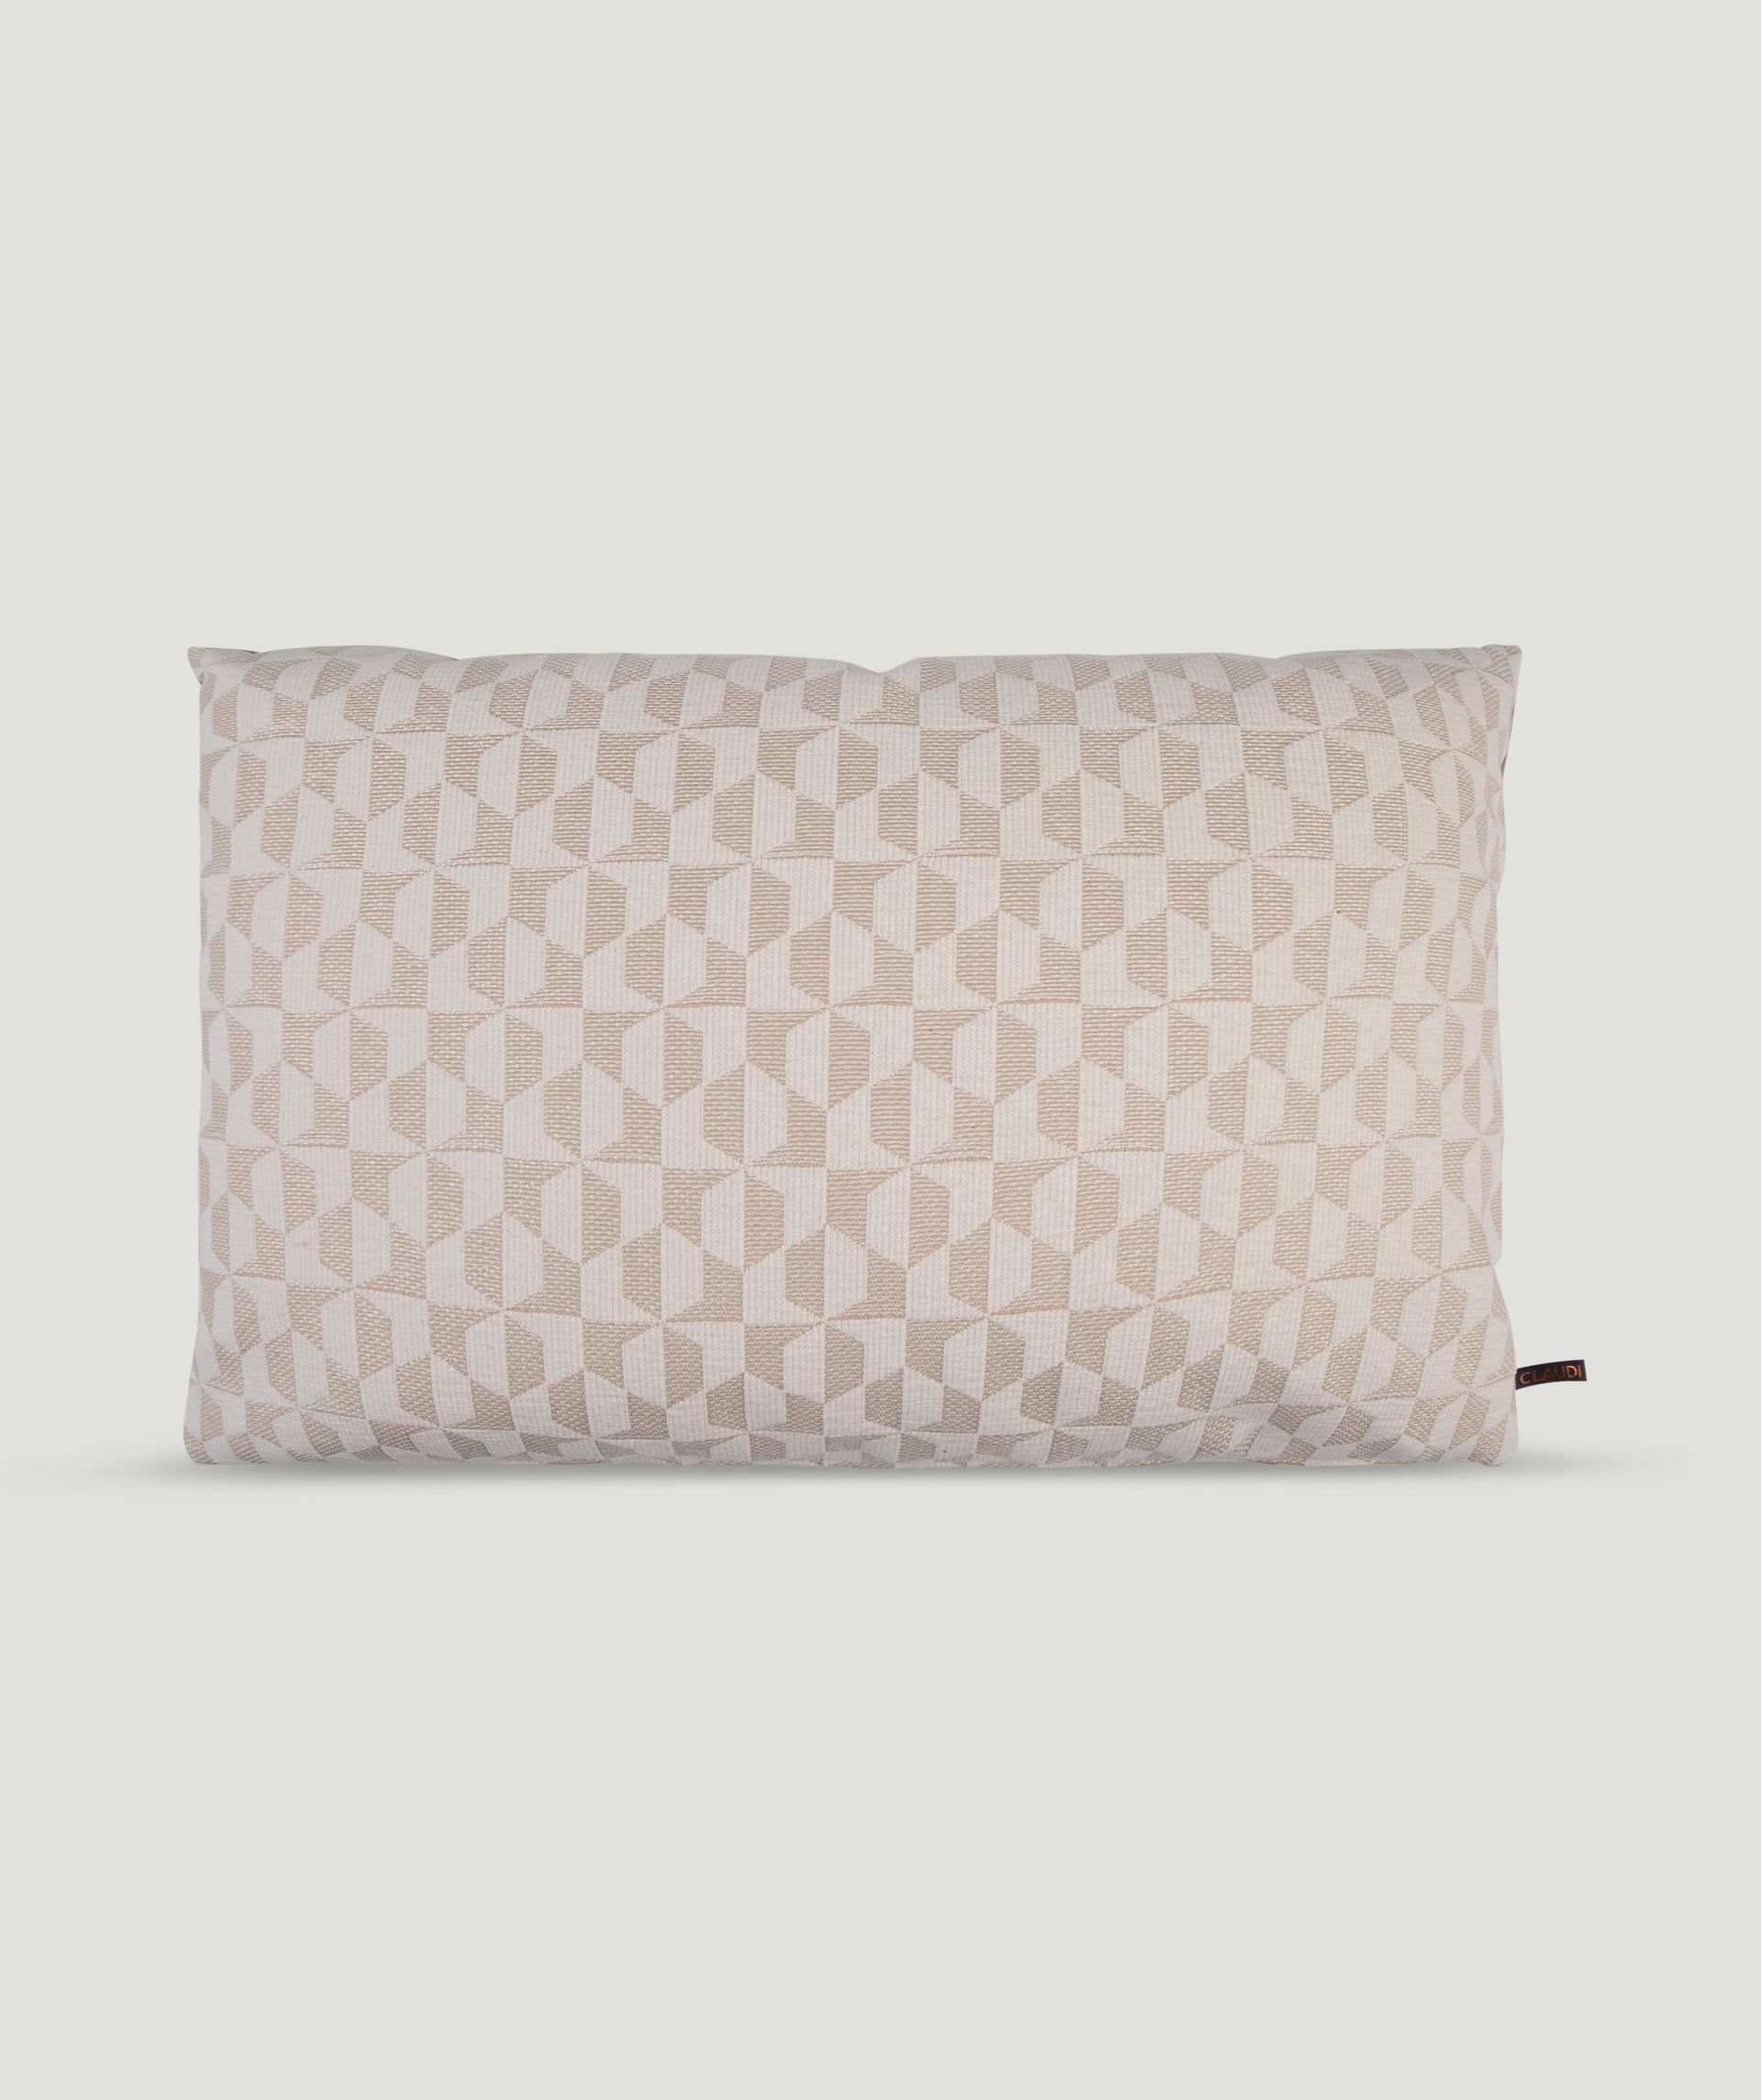 Gabri decorative cushion - CLAUDI